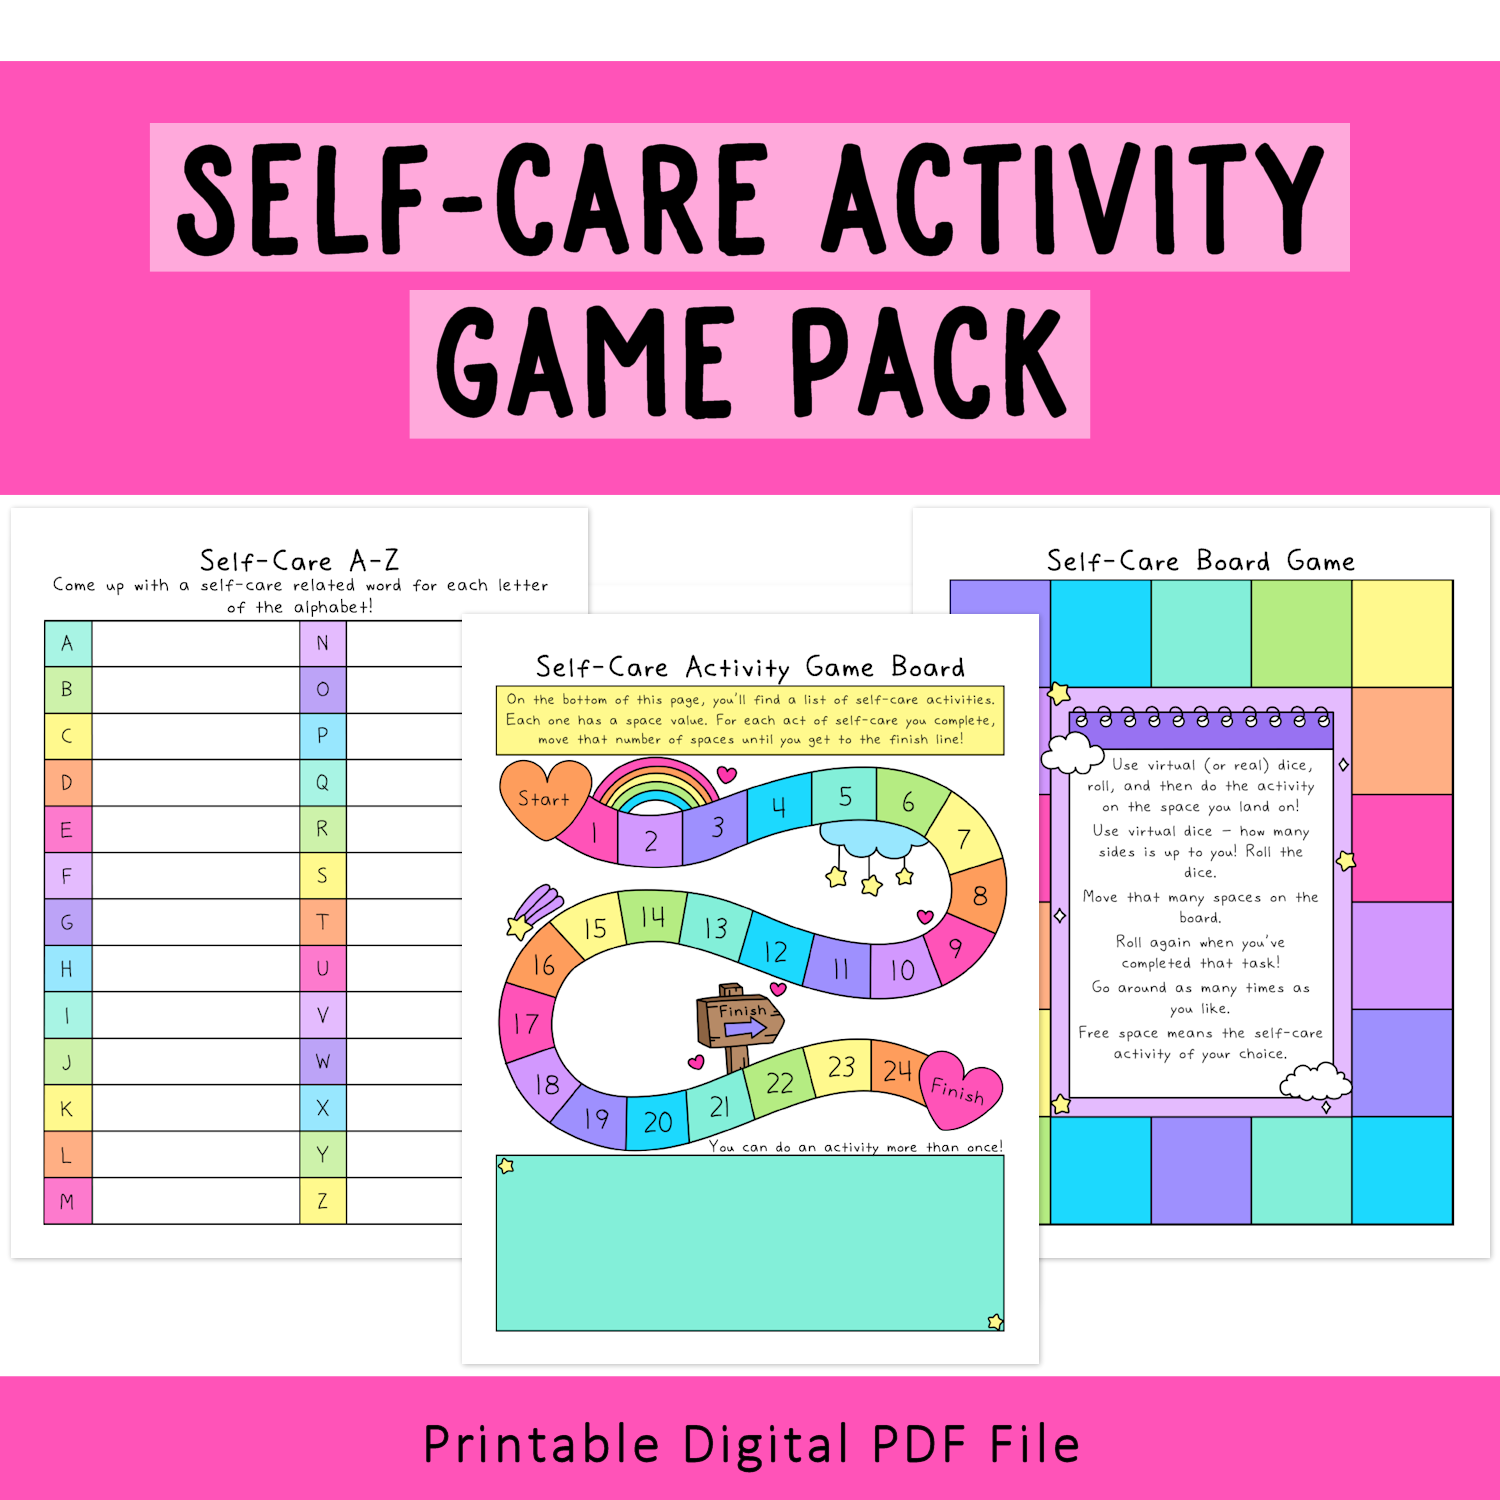 Create Your Own Self-Care Kit! - Self-Love Rainbow